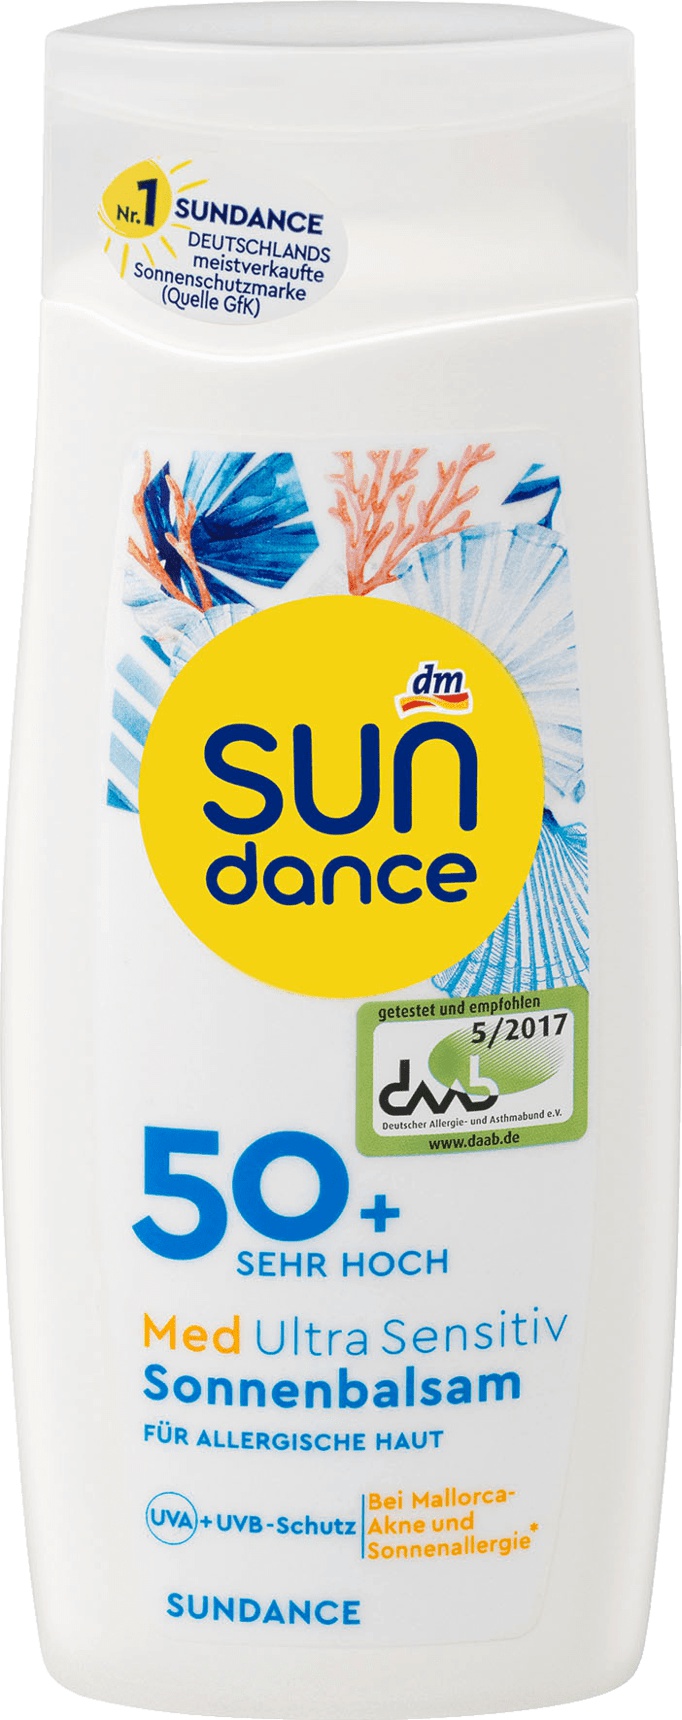 SUNdance Sonnenbalsam Med Ultra Sensitive Lsf 50+